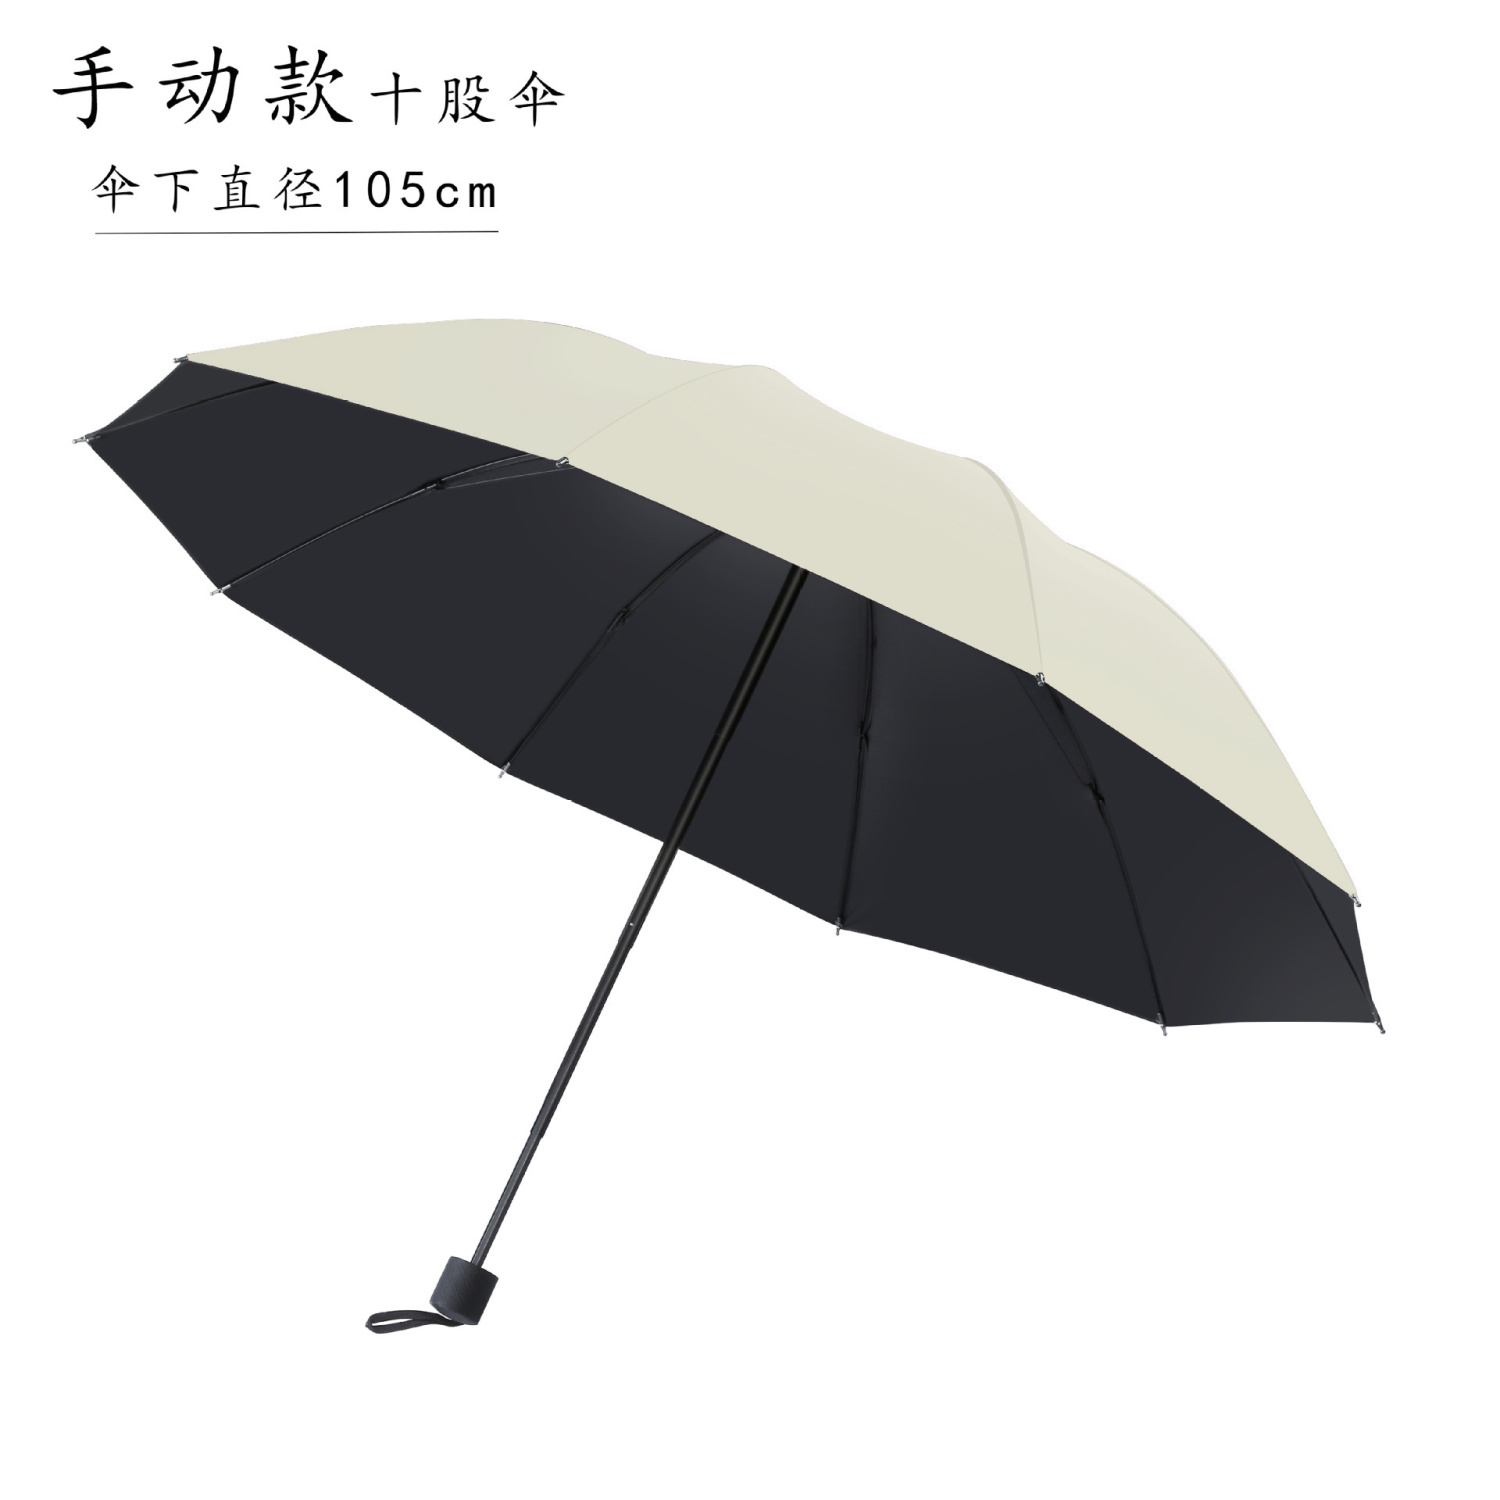 Umbrella Large Oversized Manual Folding Umbrella Sun Protection Sun Shade Rain Dual-Use Men and Women Student Minimalist Business Umbrella